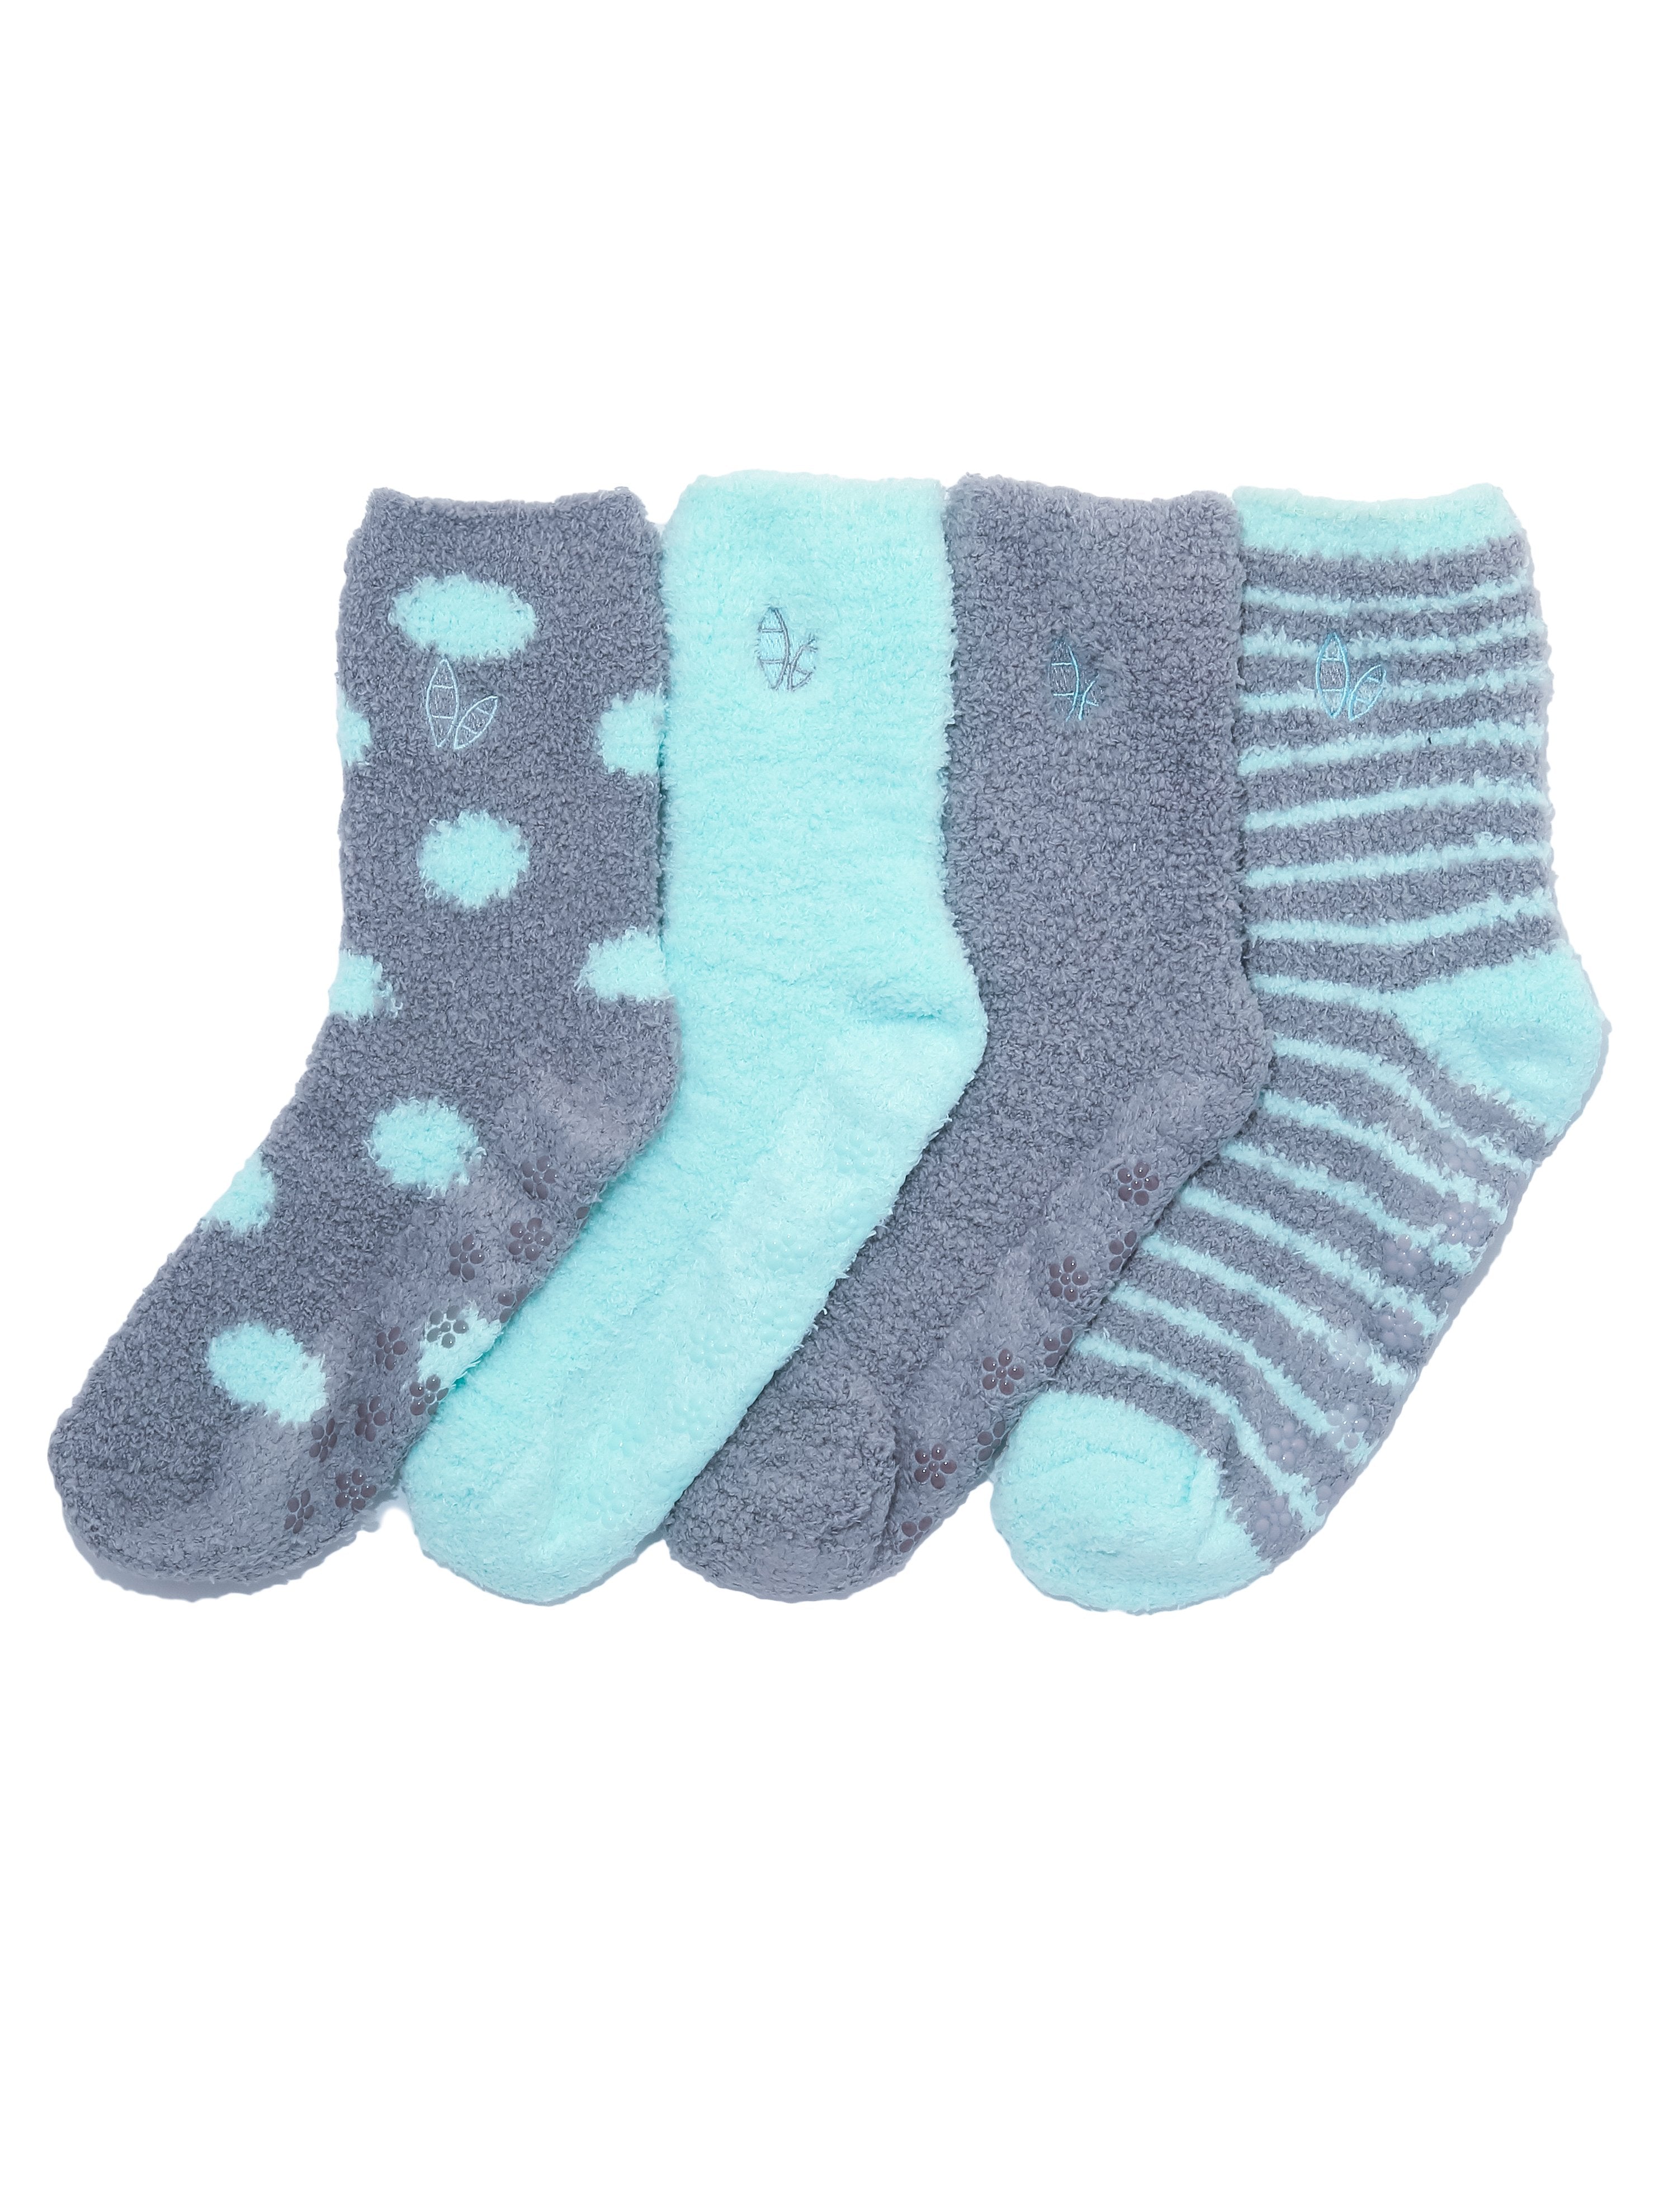 Women's (4 Pairs) Soft Anti-Skid Fuzzy Winter Crew Socks - Set A5